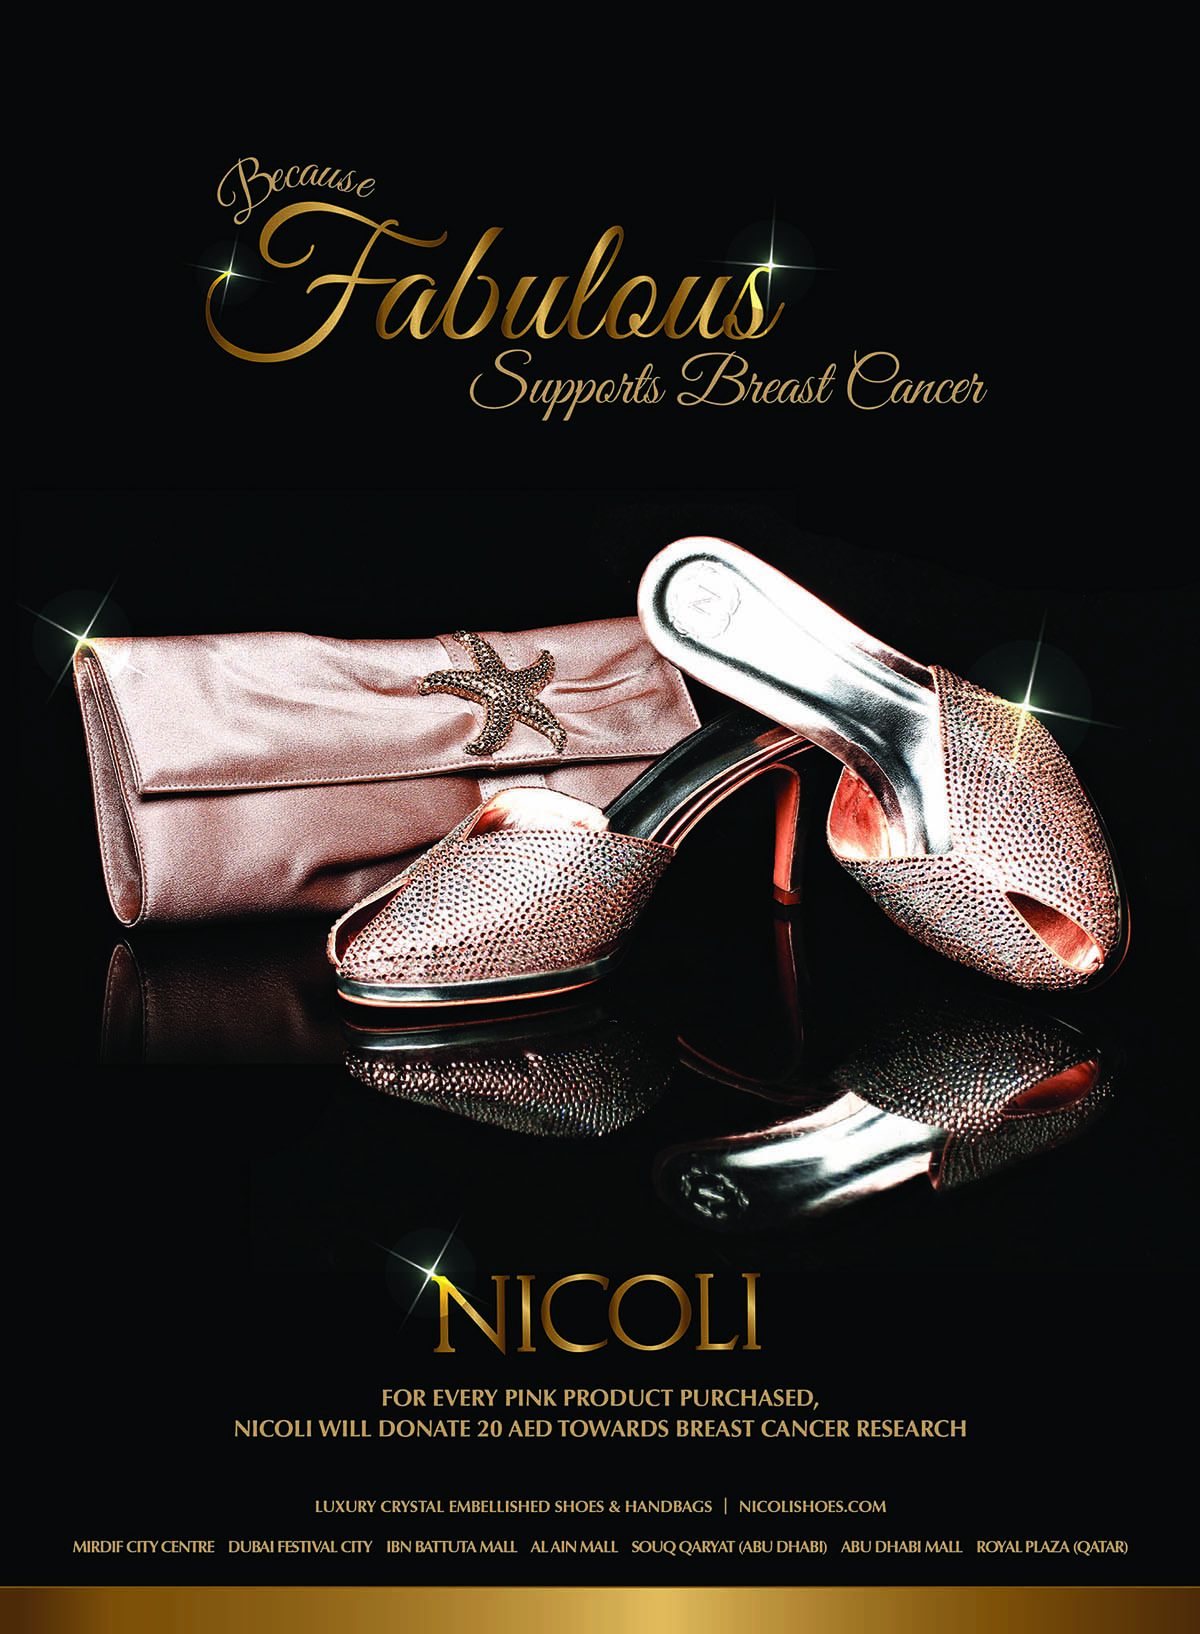 NICOLI - The luxury crystal embellished shoe and handbag brand - Fabulous Campaign - shop online at www.nicolishoes.com